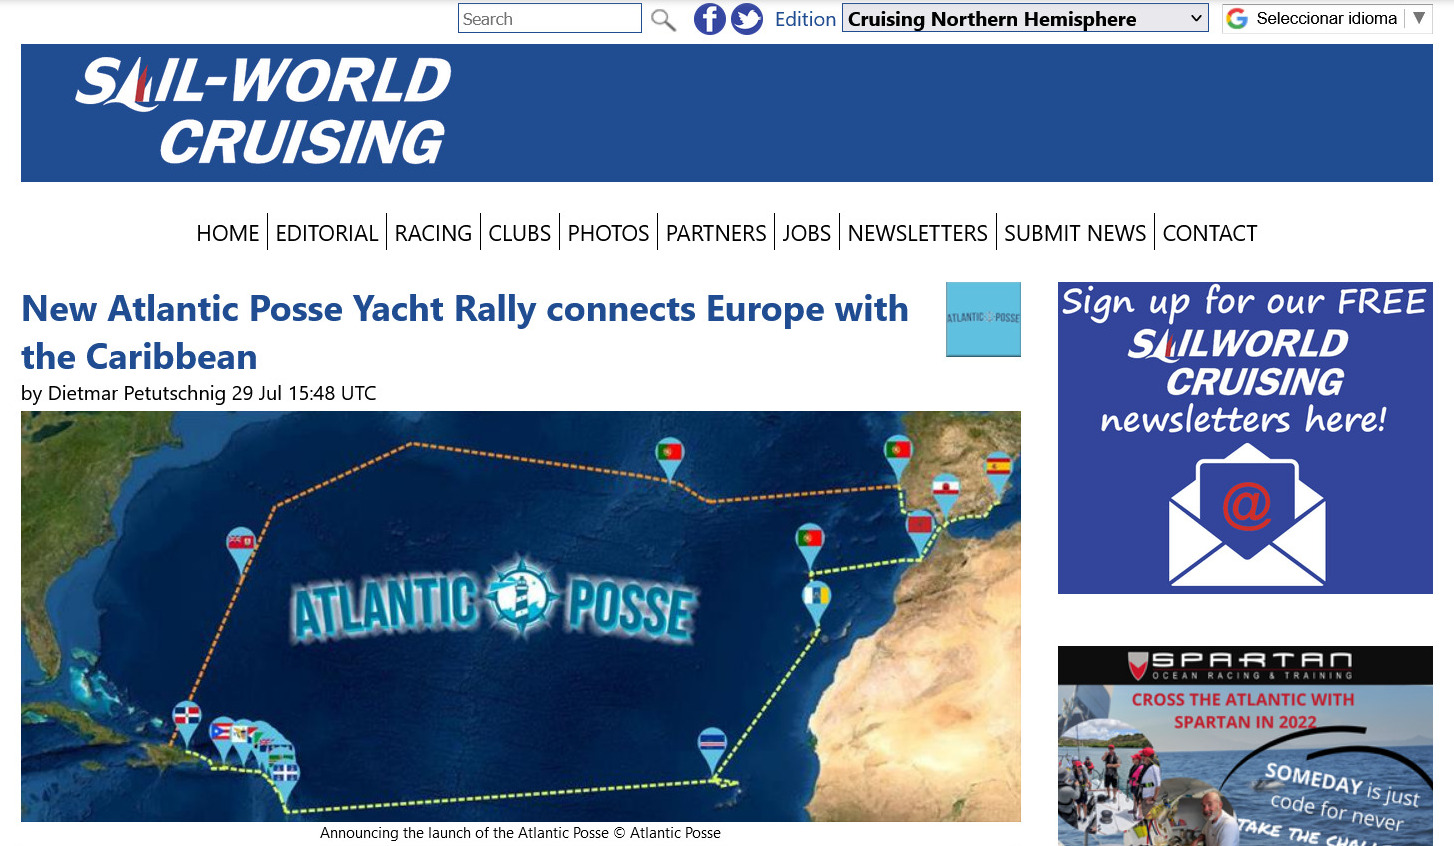 sailworldcruising.com 29 Jul 15:48 UTC New Atlantic Posse Yacht Rally